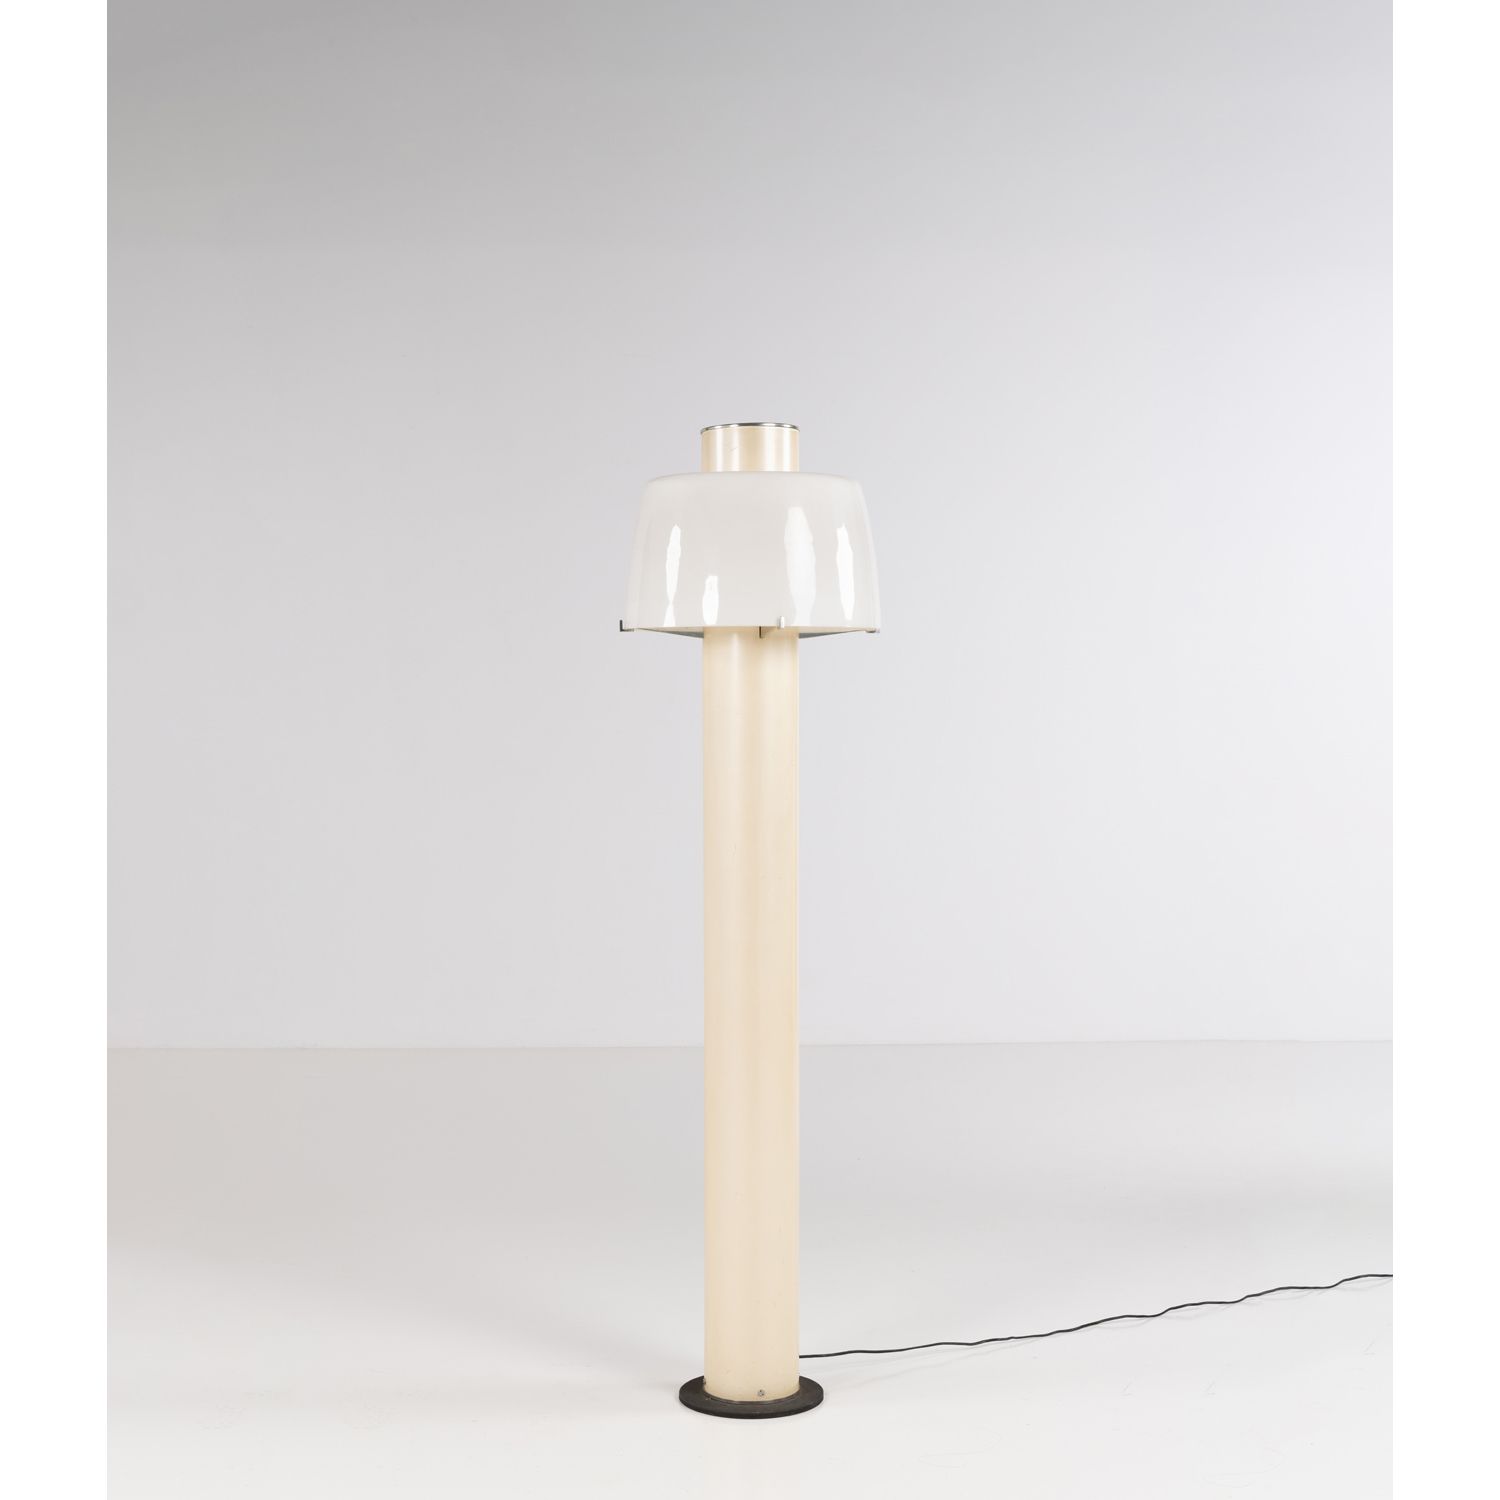 Null Gino Sarfatti (1912-1985)

Modelo n° 1006

Lámpara de pie

Fundición de alu&hellip;